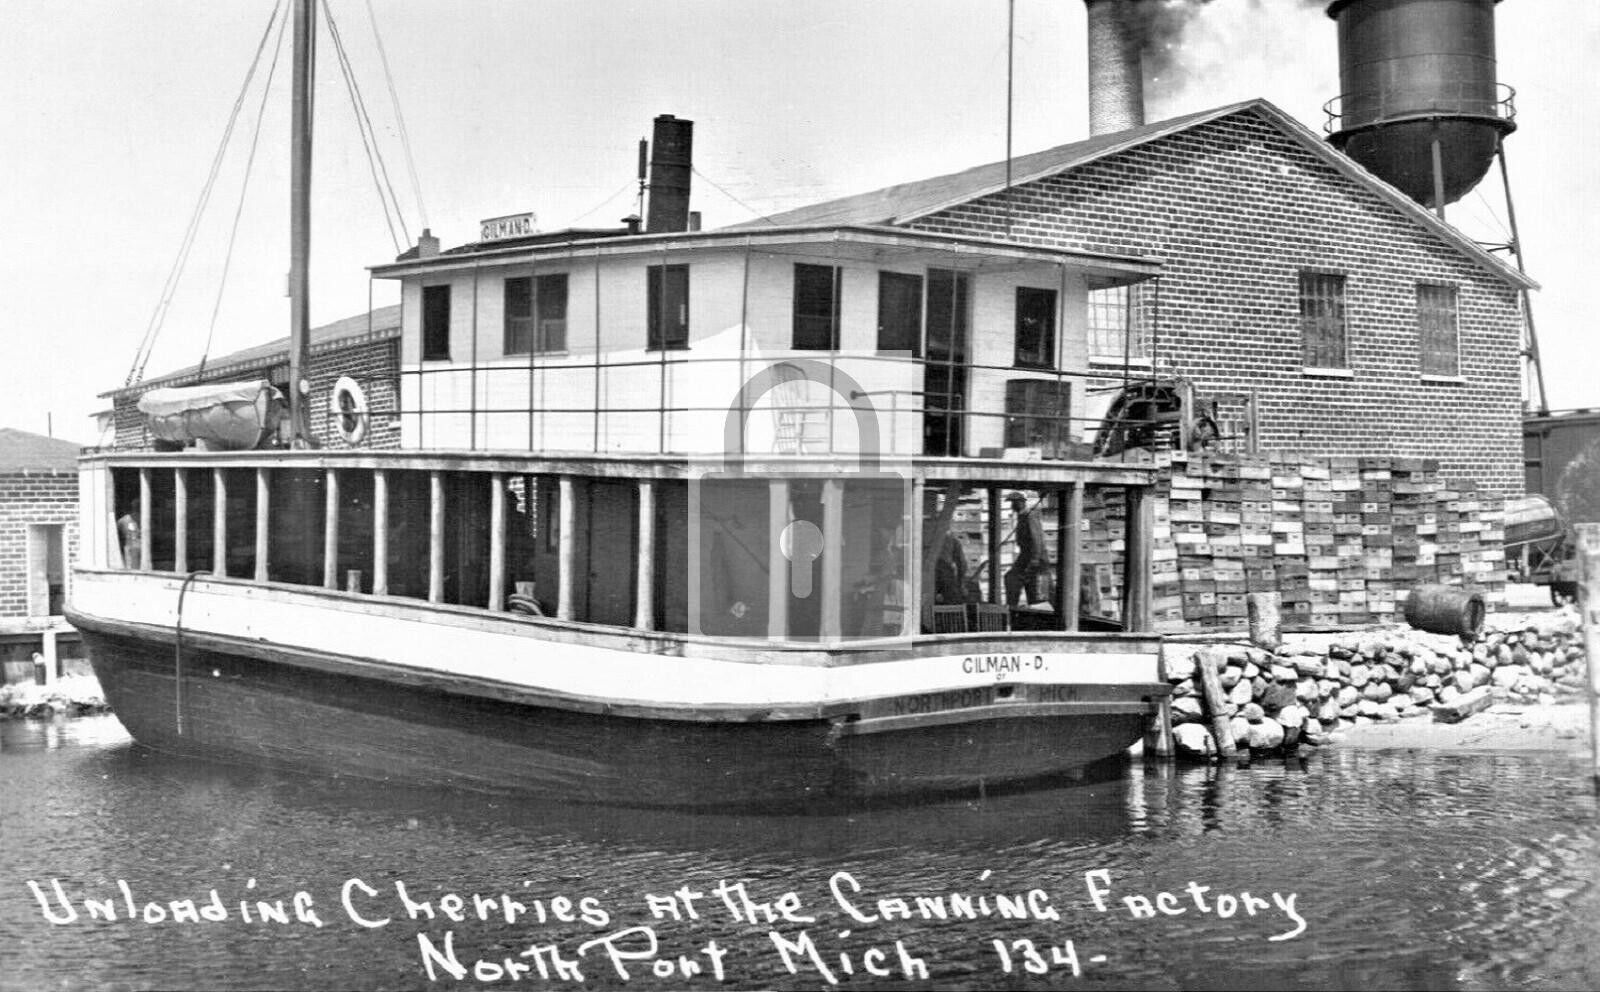 Cherry Canning Factory Boat North Port Michigan MI Reprint Postcard